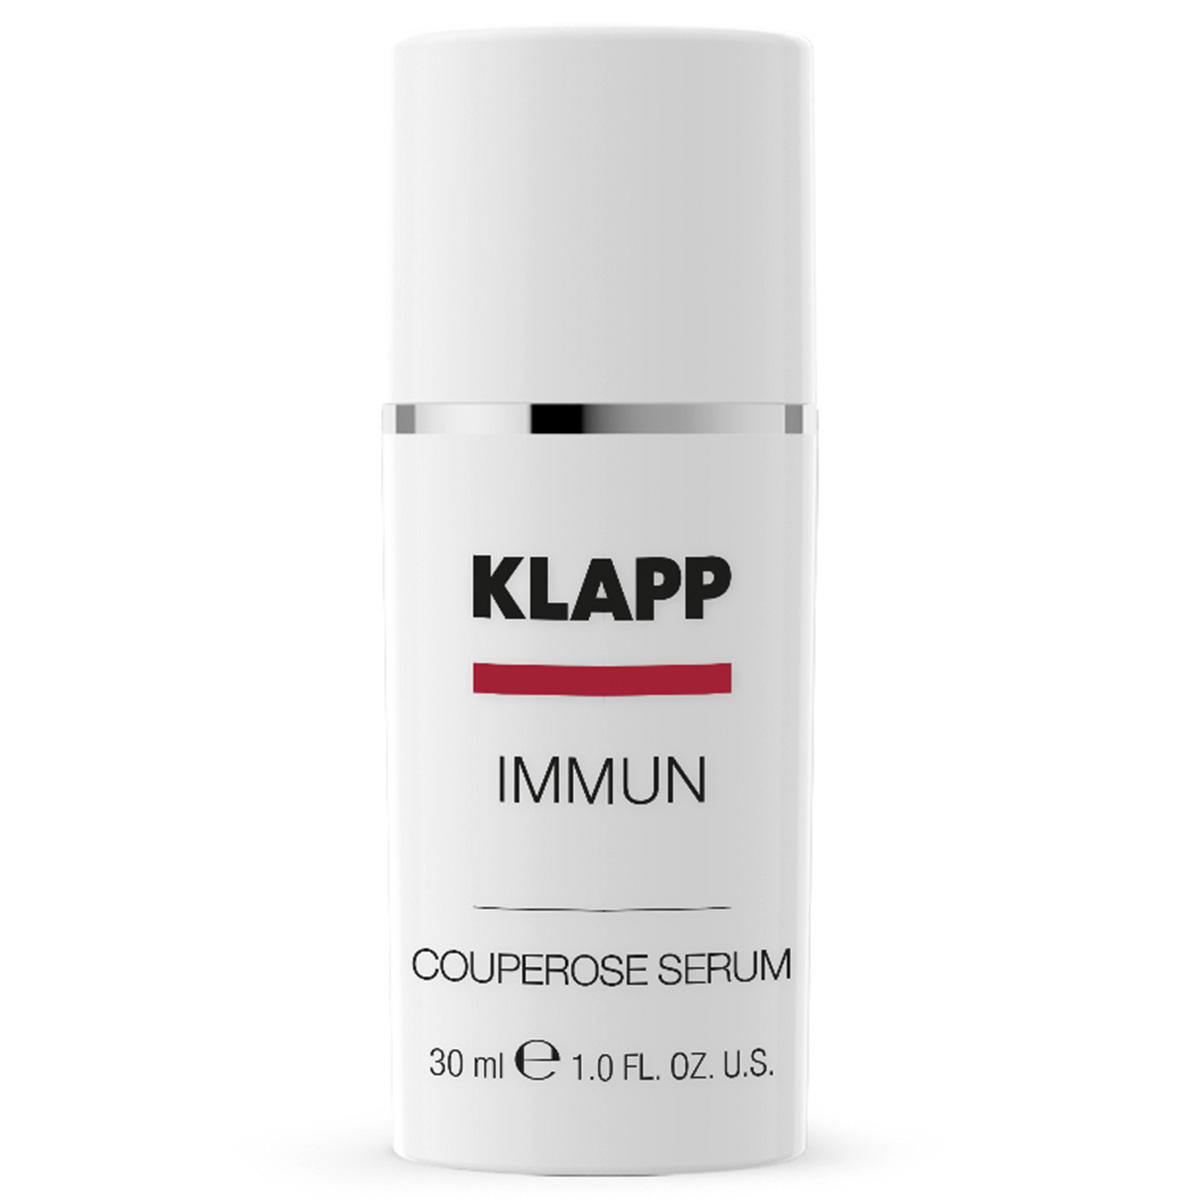 KLAPP IMMUN Couperose Serum 30 ml - 1